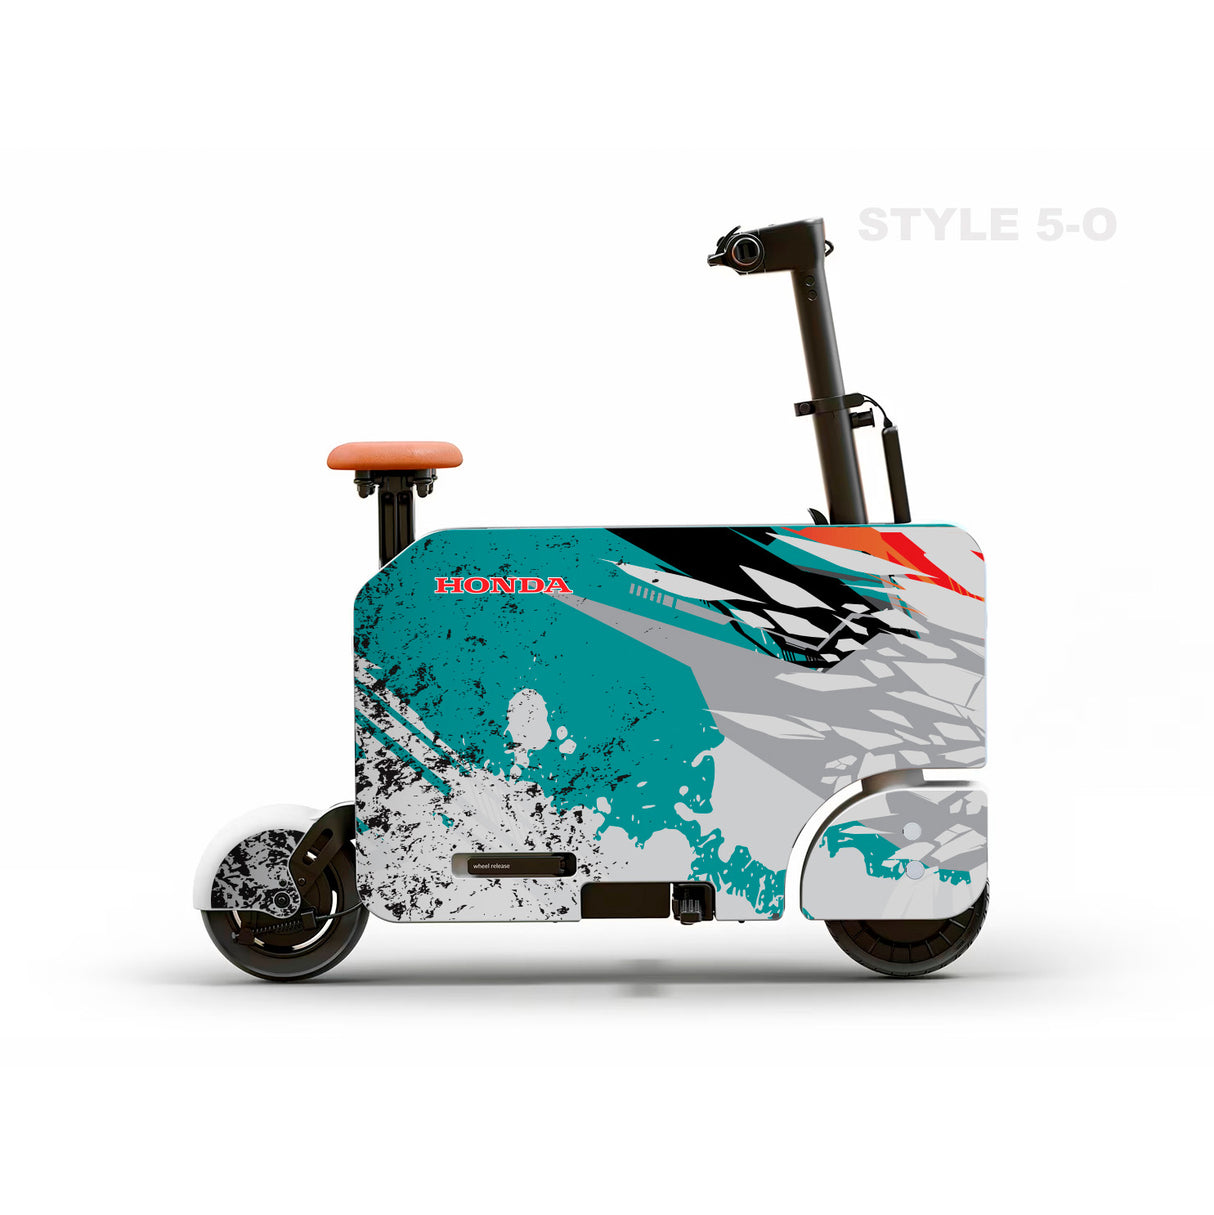 Honda Motocompacto Skin | Graphic Overlay | Style 5-0